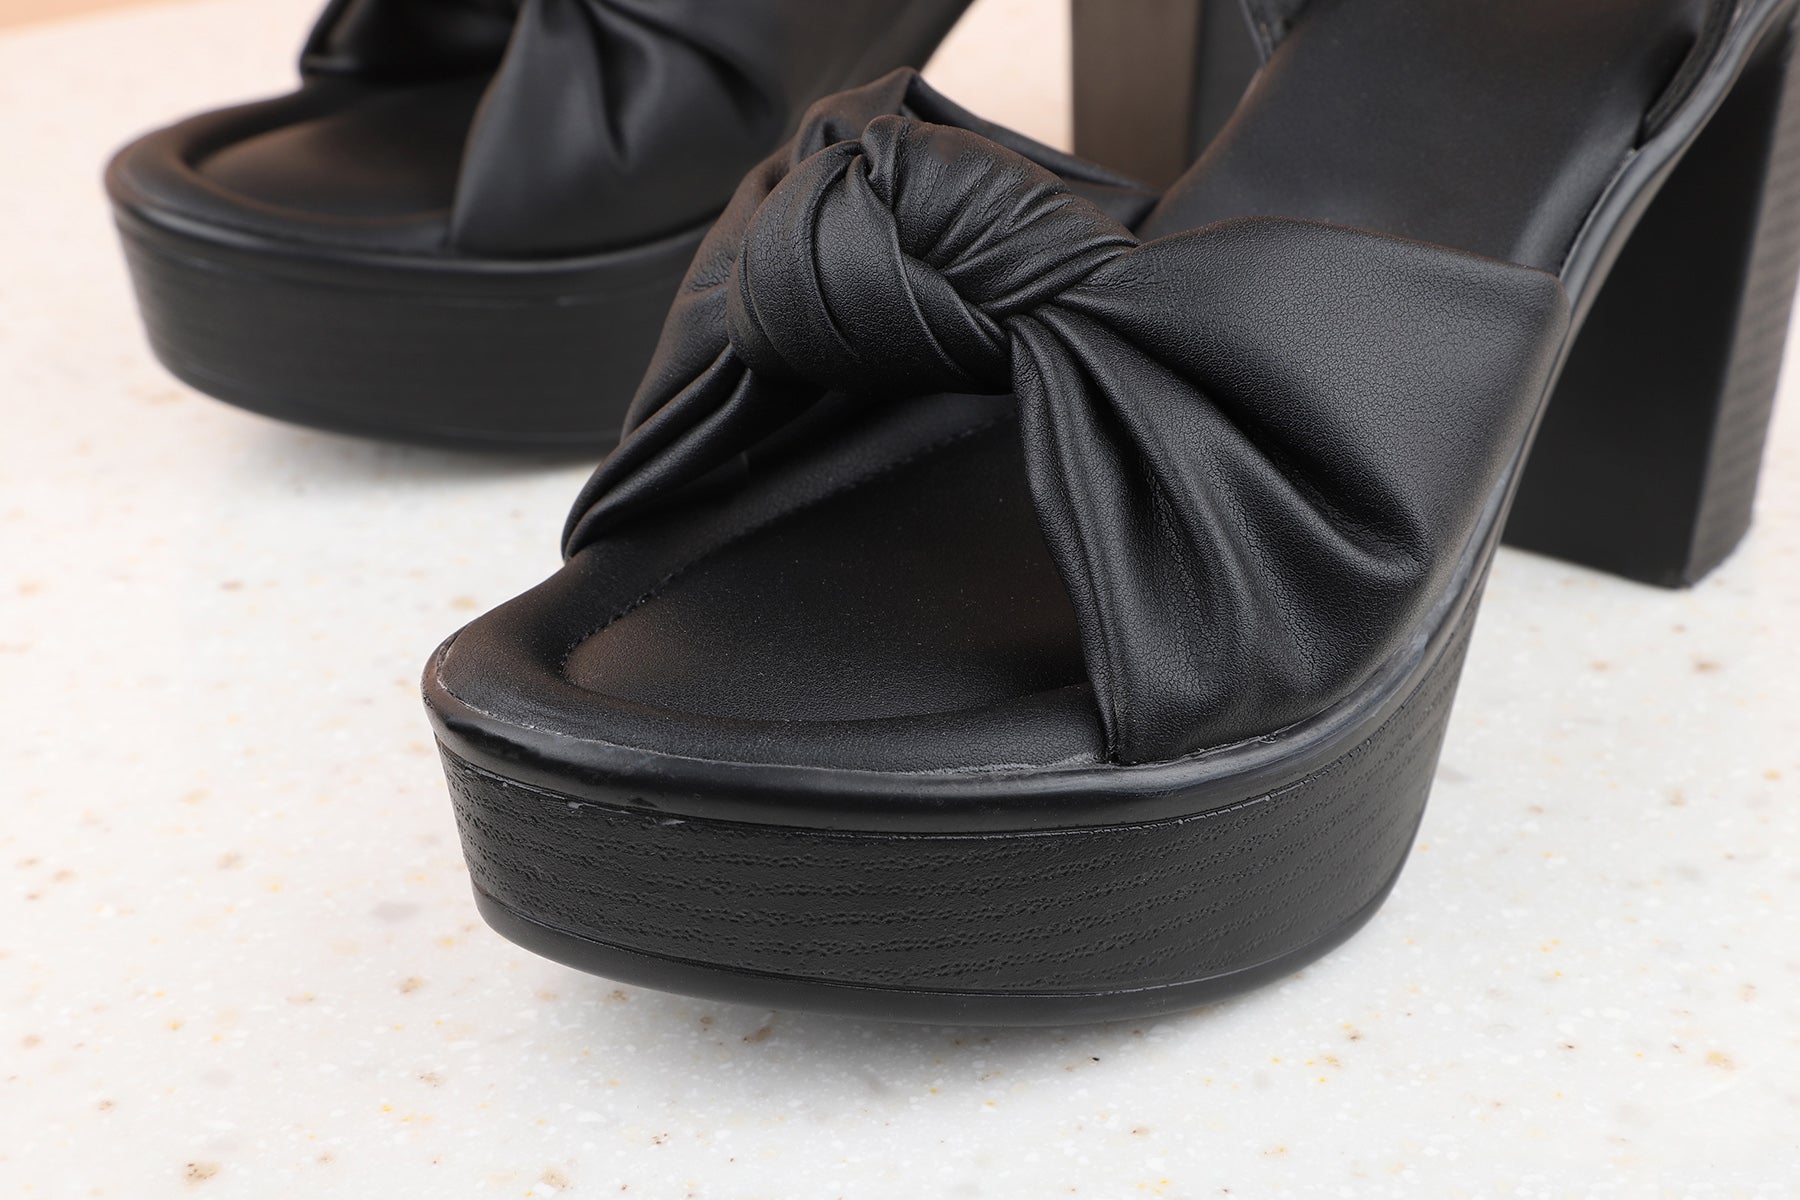 Black Suede Leather Platforms Stiletto Super High Heels Shoes